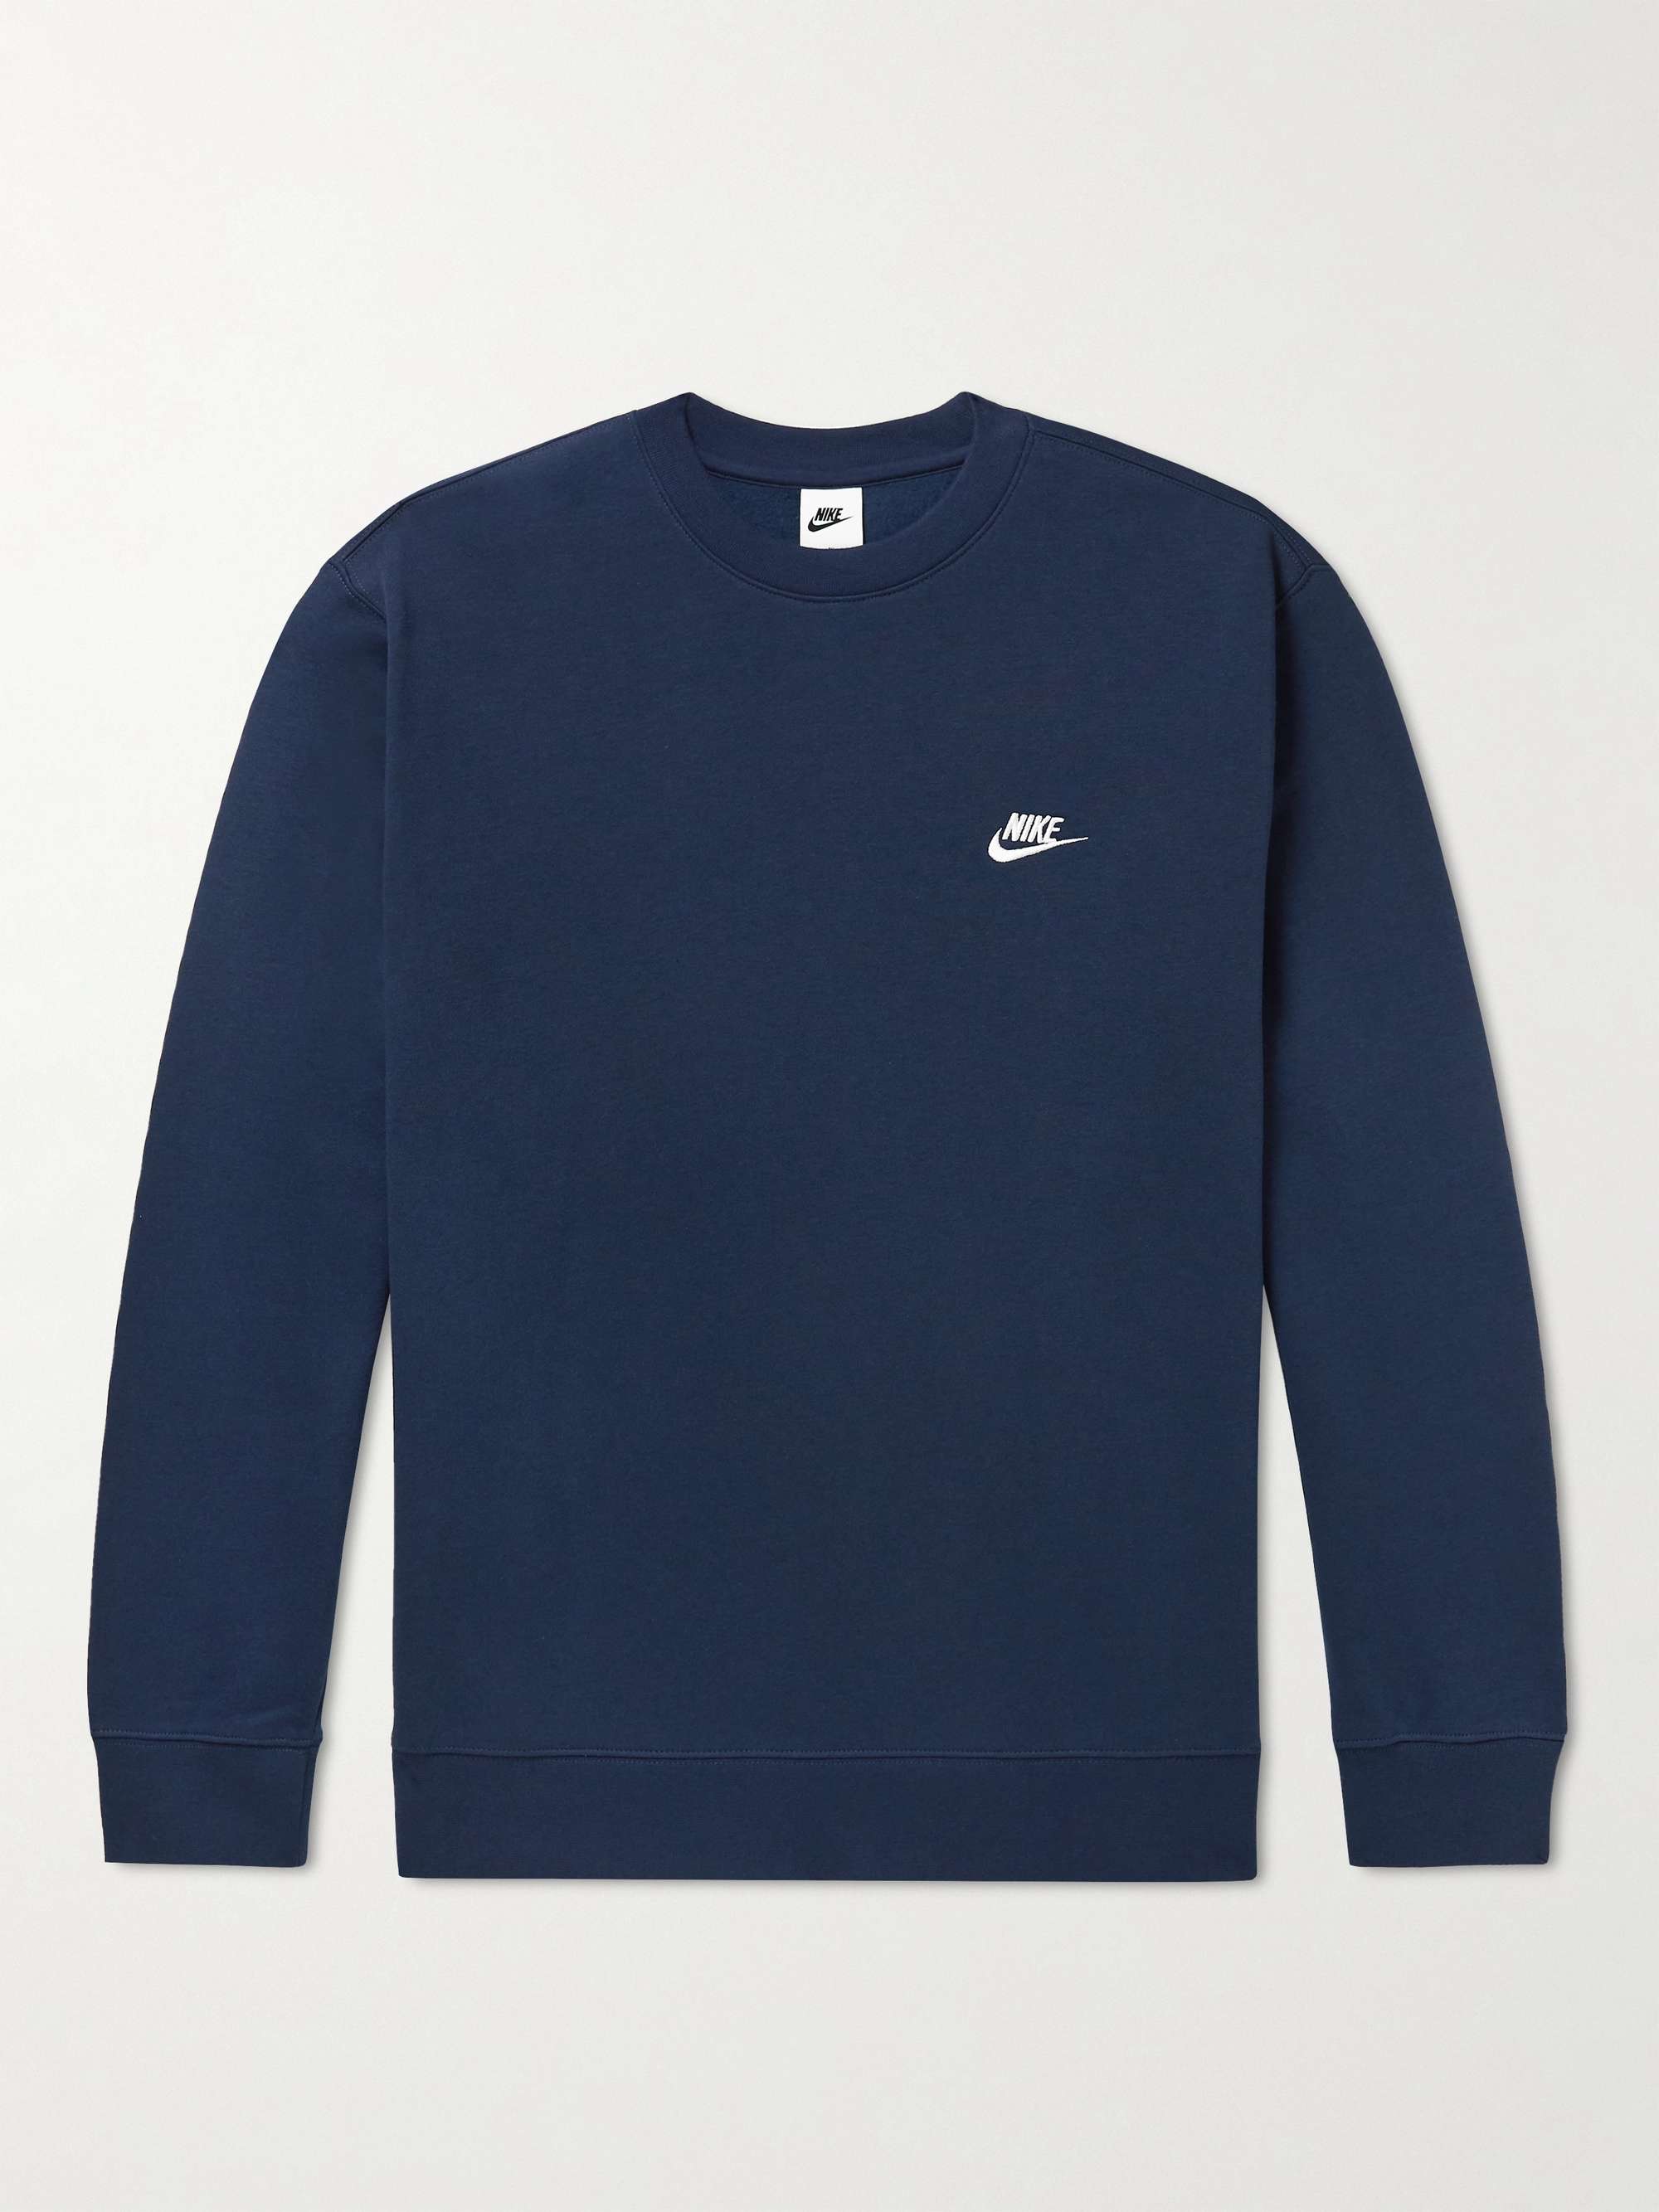 NIKE NSW Logo-Embroidered Cotton-Blend Jersey Sweatshirt for Men | MR PORTER